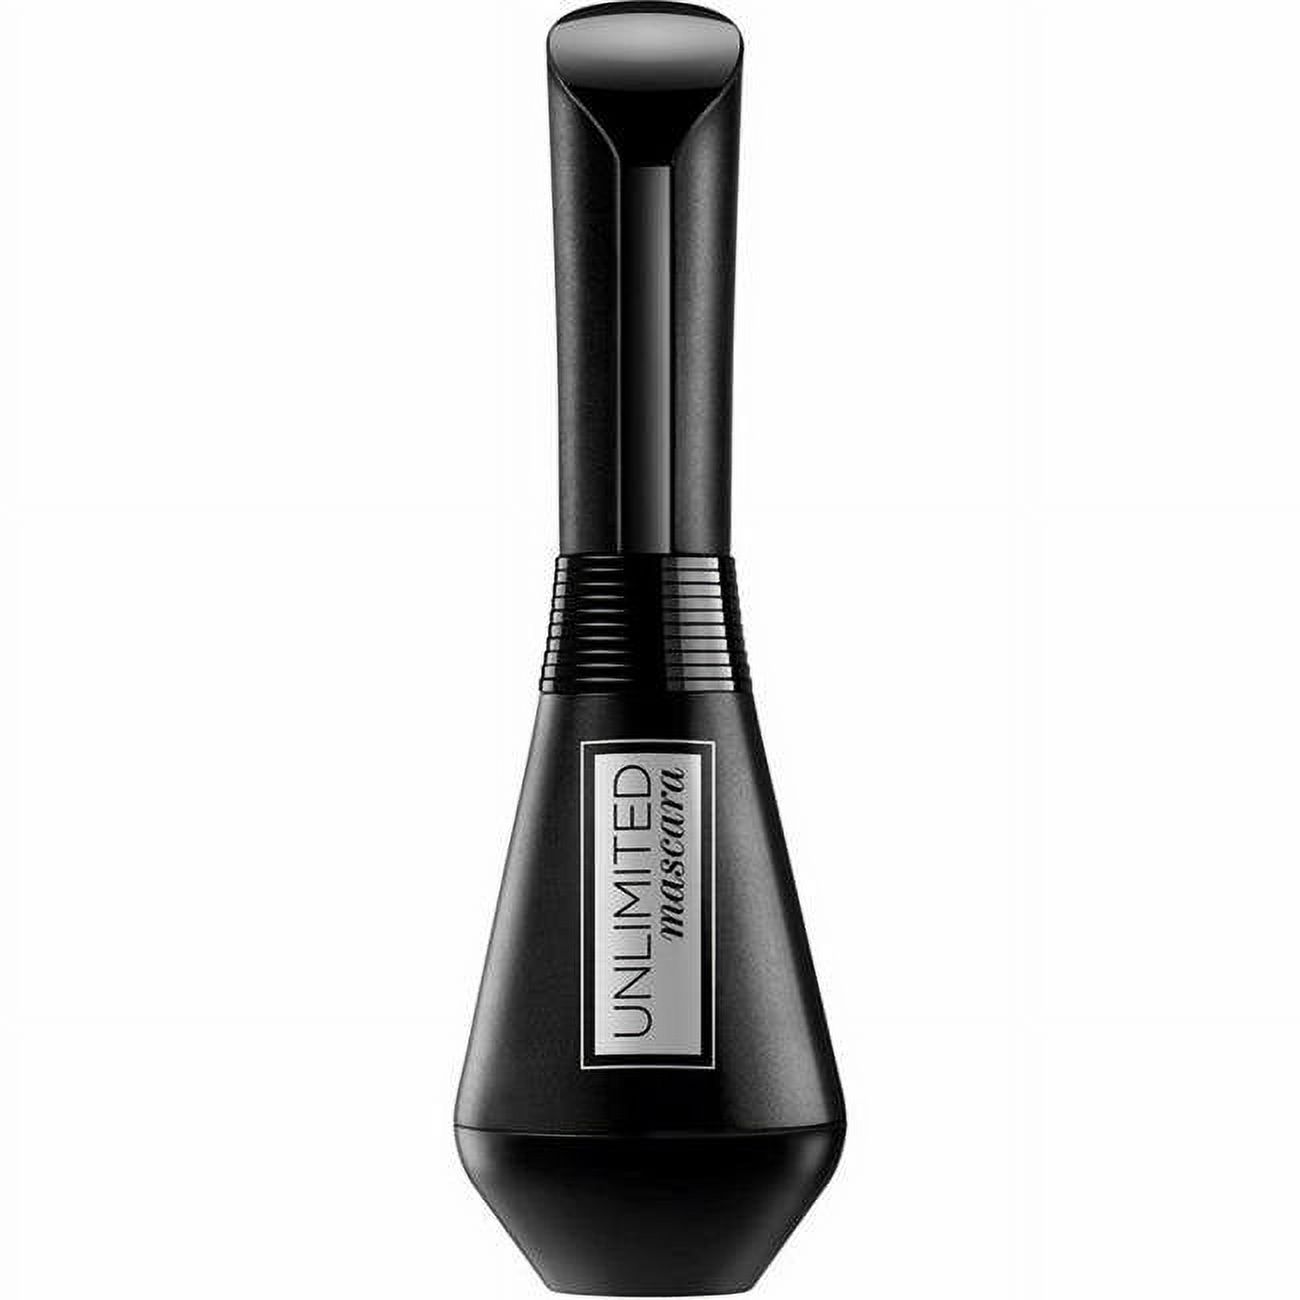 L'Oreal Paris Unlimited Lash Lifting And Lengthening Washable Mascara, Black - image 1 of 2